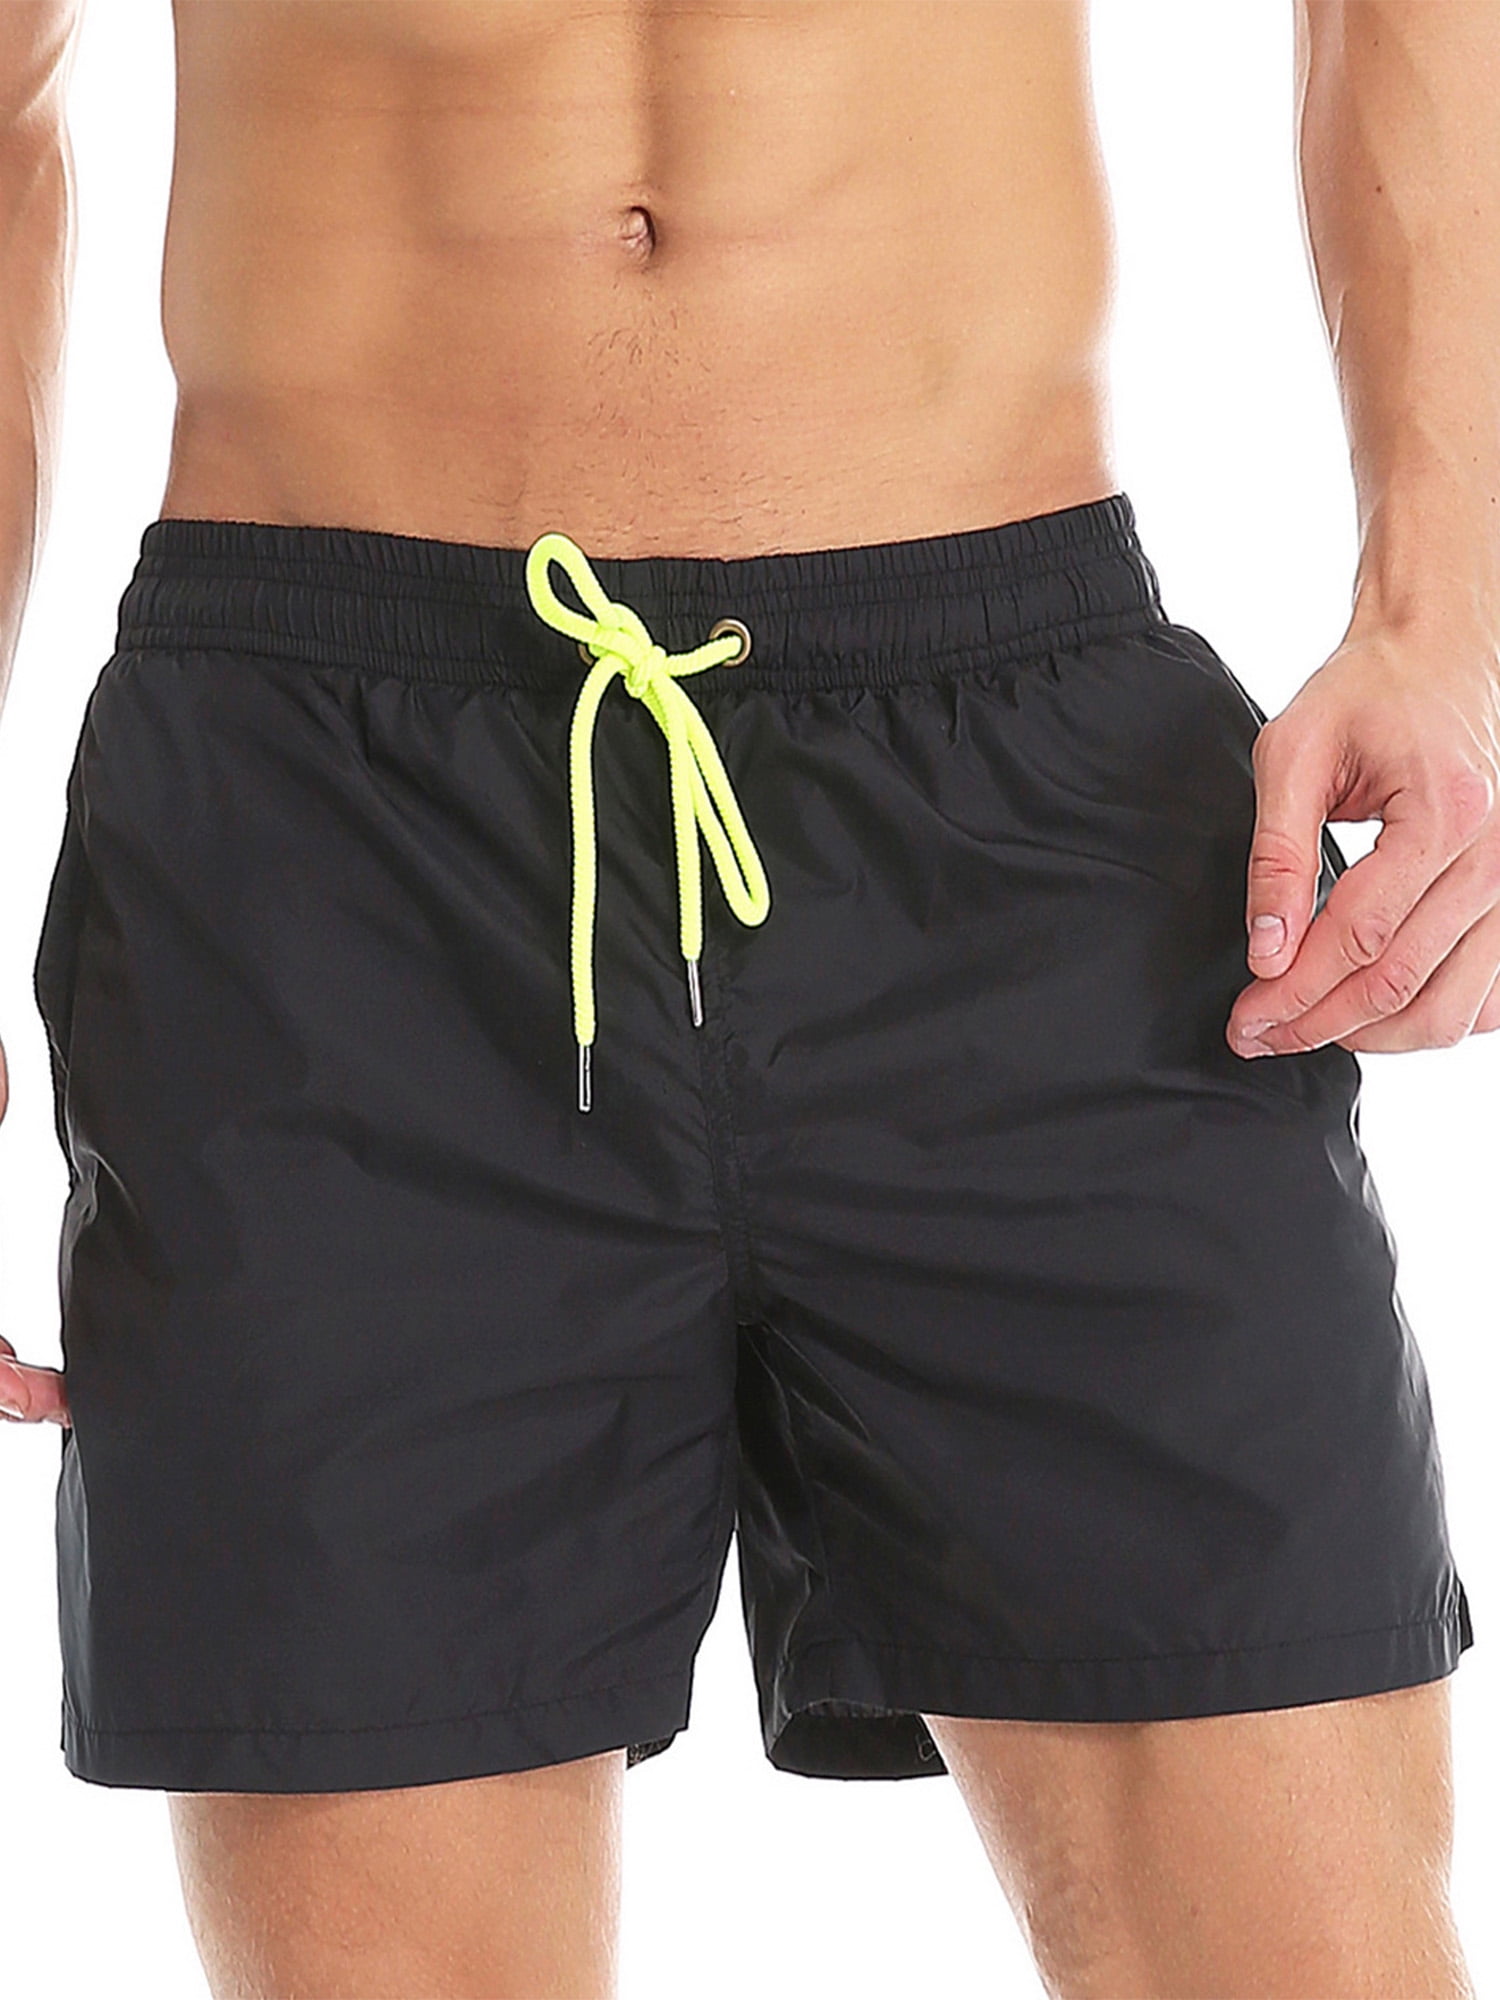 for Men Stone Island Synthetic Nylon Swimming Trunks in Red Green Mens Clothing Beachwear Swim trunks and swim shorts 